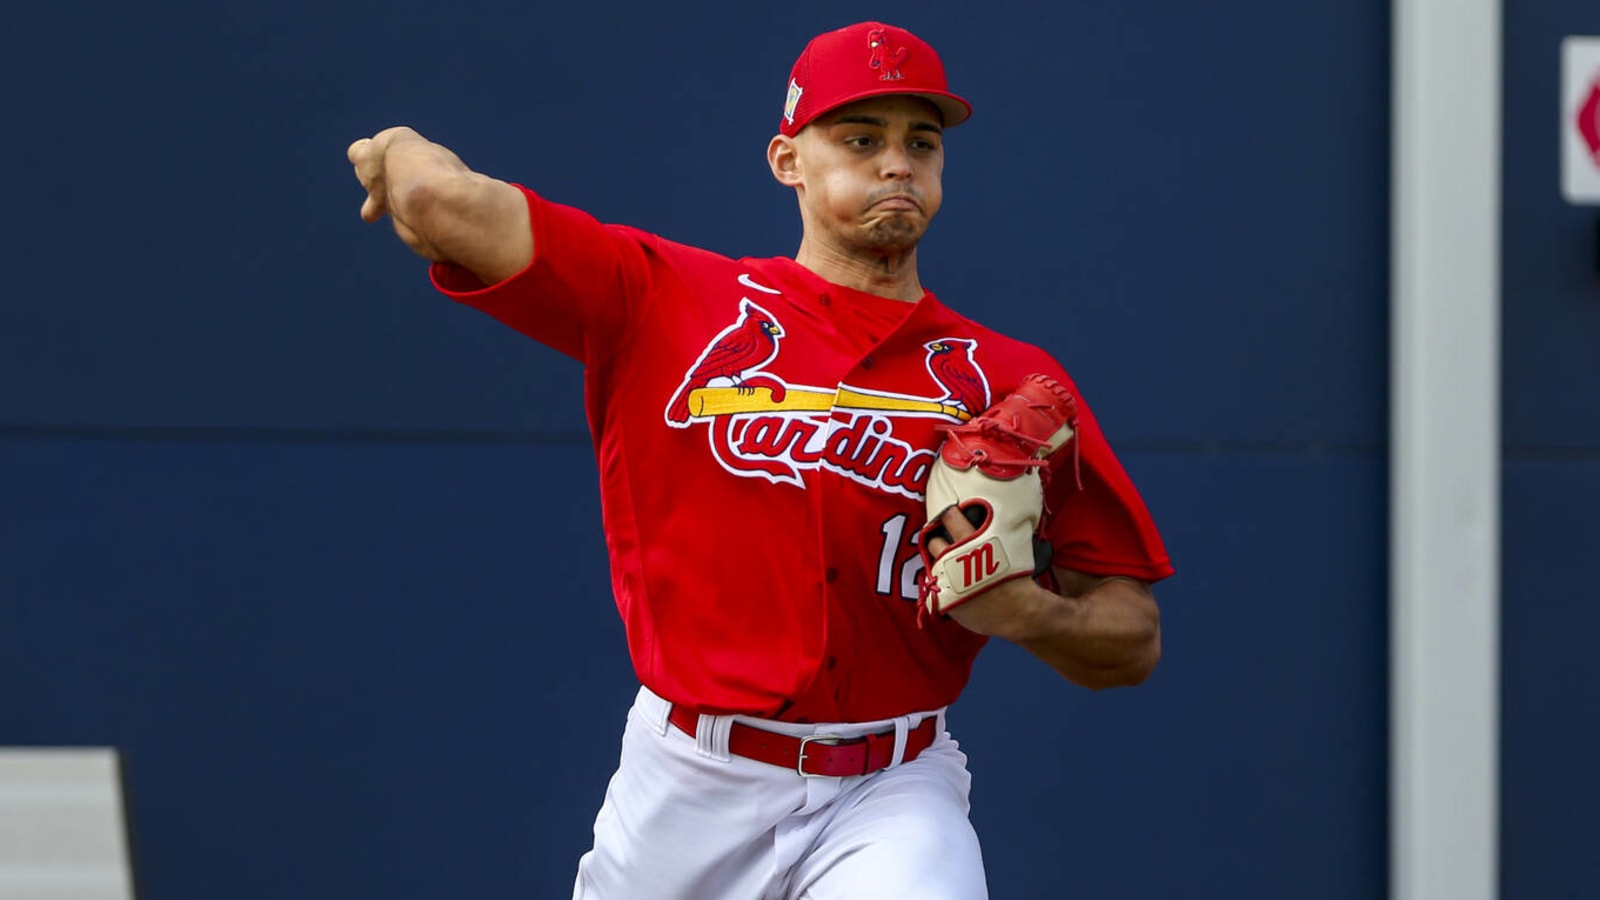 Jordan Hicks to begin season in Cardinals' rotation